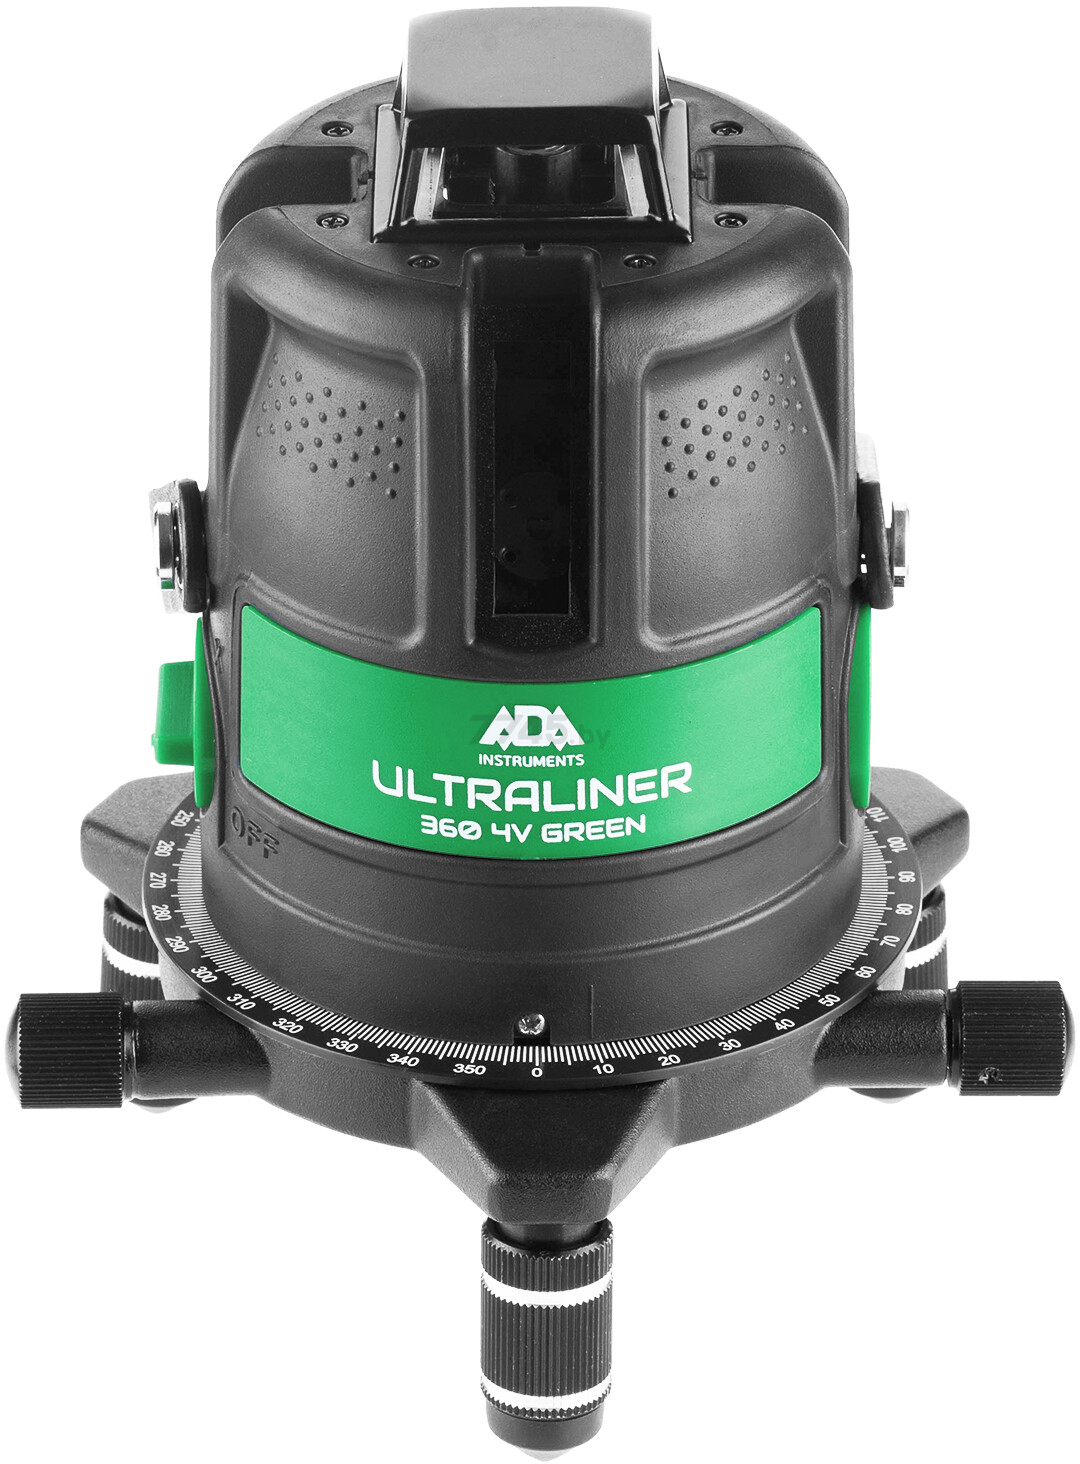 Уровень лазерный ADA INSTRUMENTS ULTRALiner 360 4V Green (A00540) - Фото 4